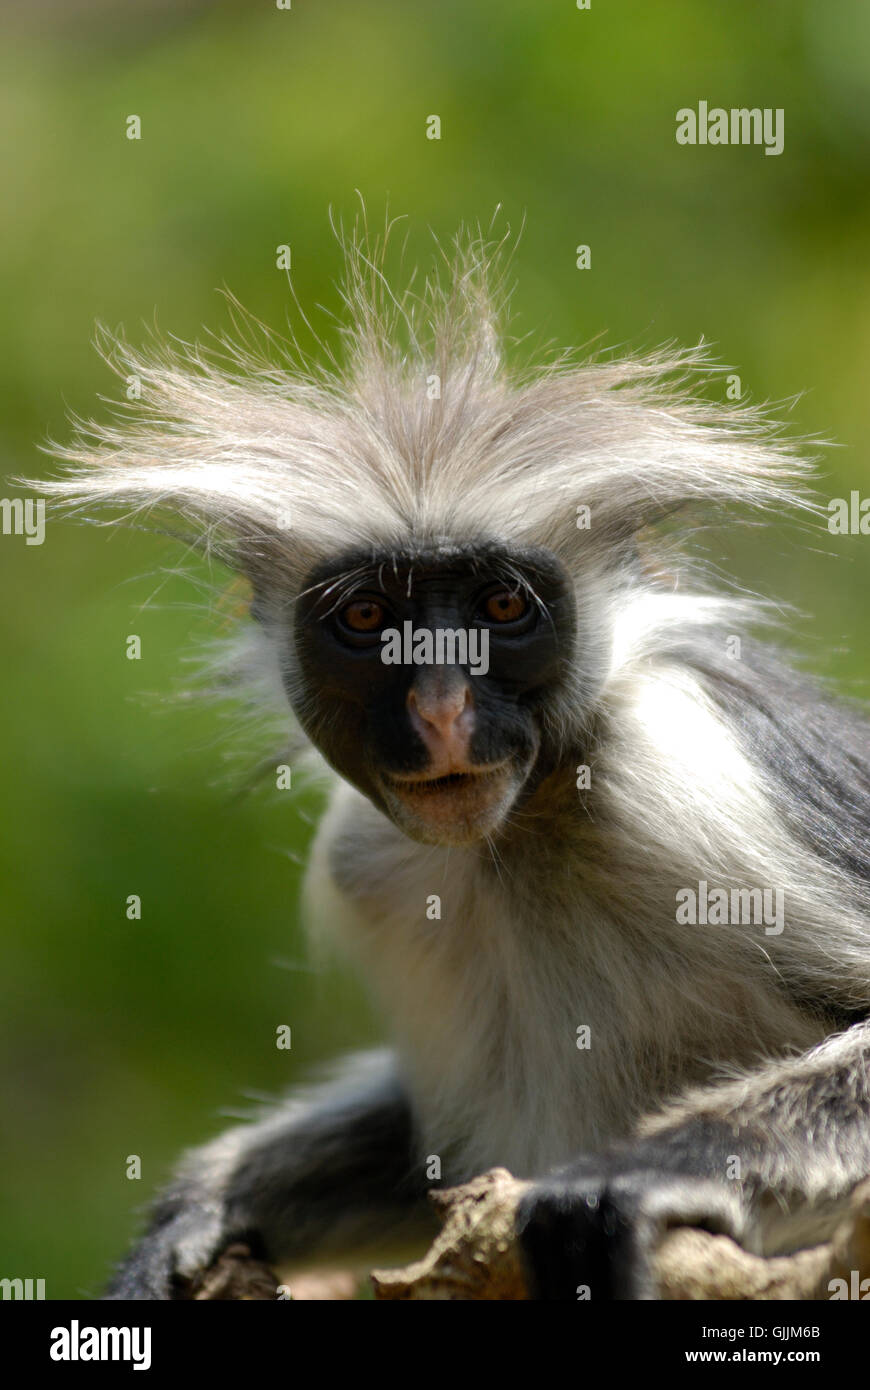 wild monkey crazy Stock Photo